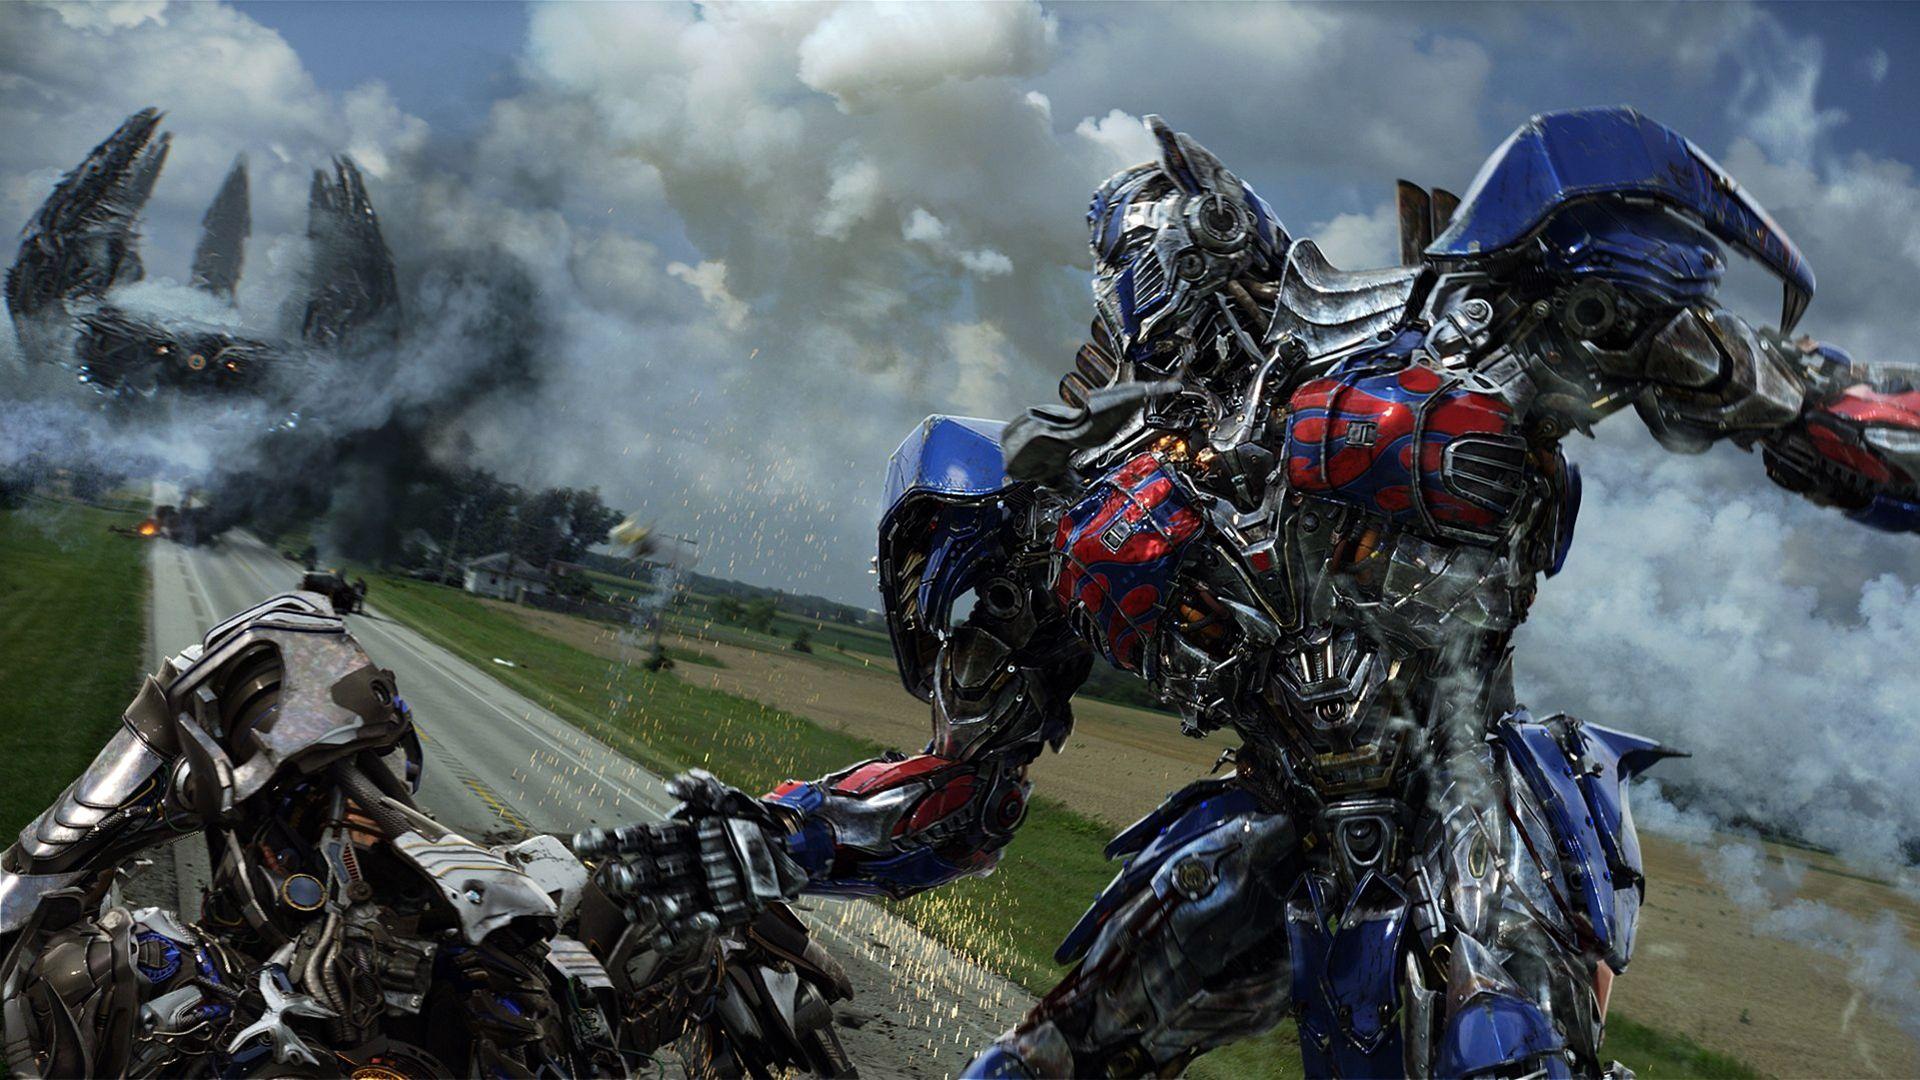 Optimus Prime Fighting Transformer 4 Movie